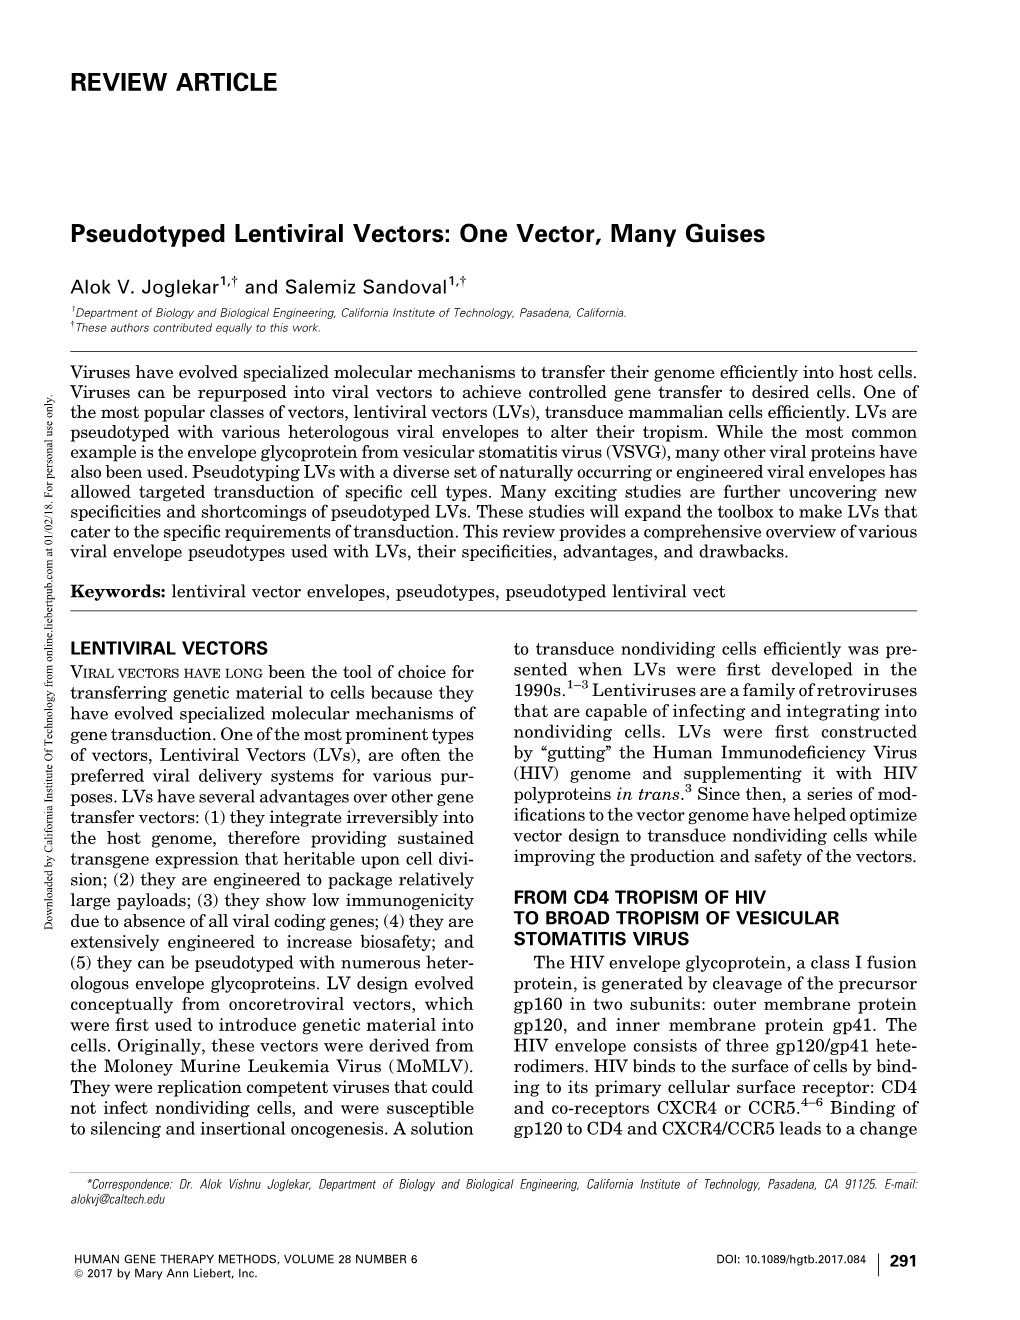 Pseudotyped Lentiviral Vectors: One Vector, Many Guises